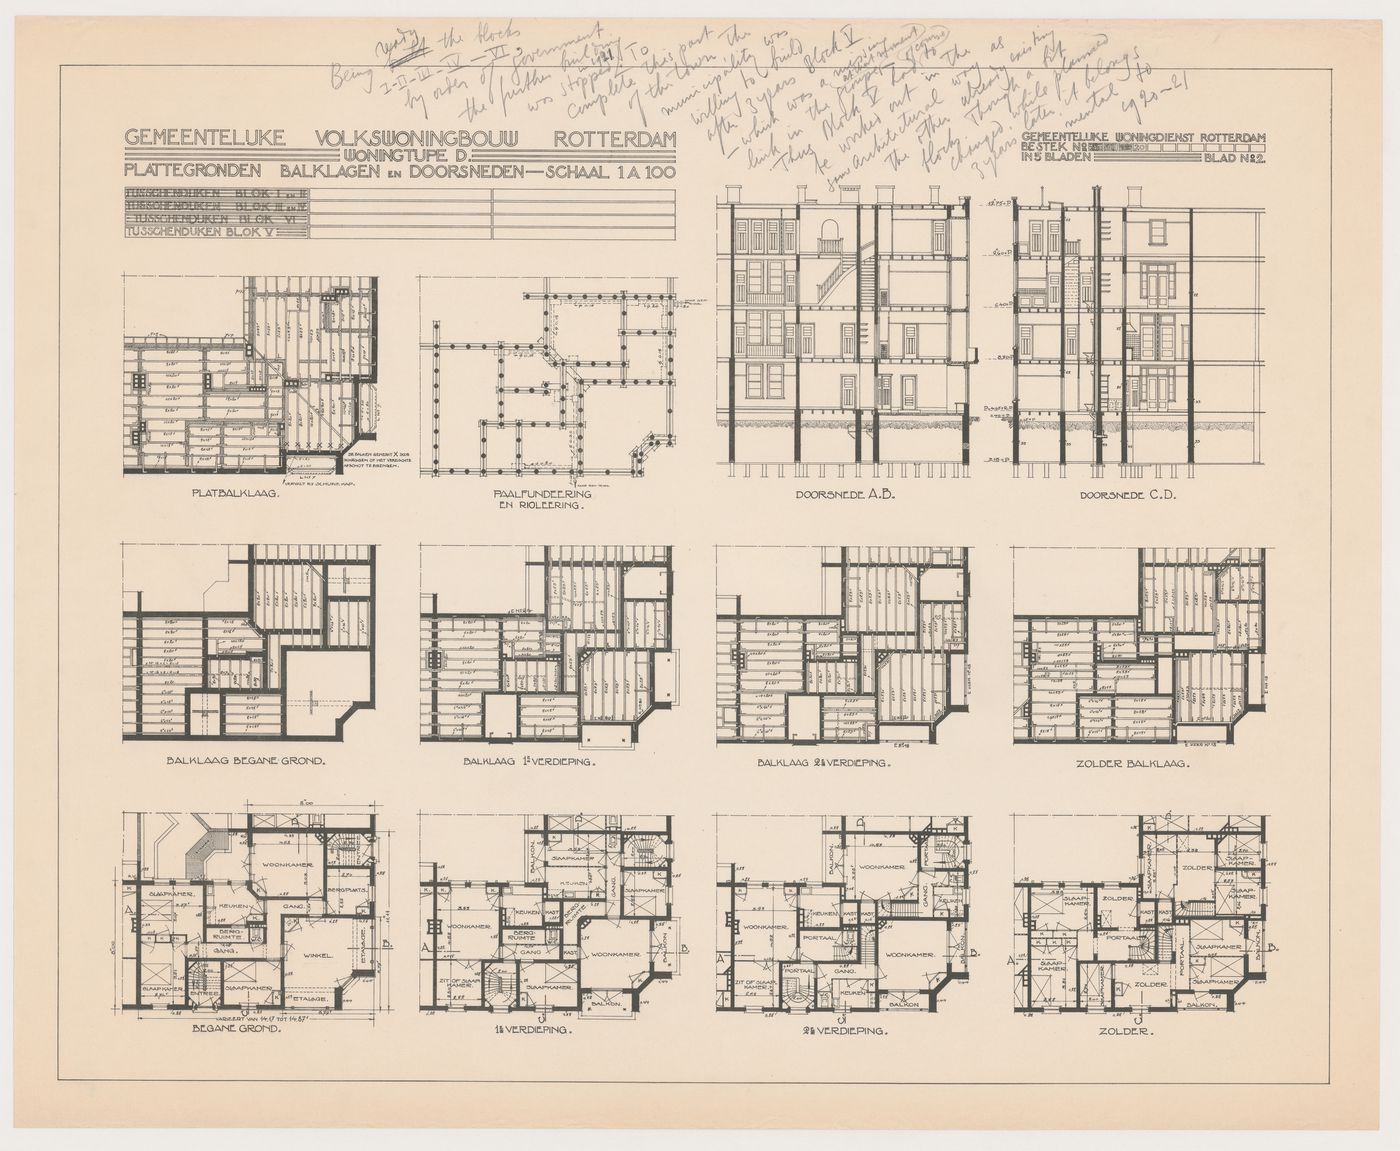 Floor, framing and piling plans and sections for Block 5, Tusschendijken Housing Estate, Rotterdam, Netherlands